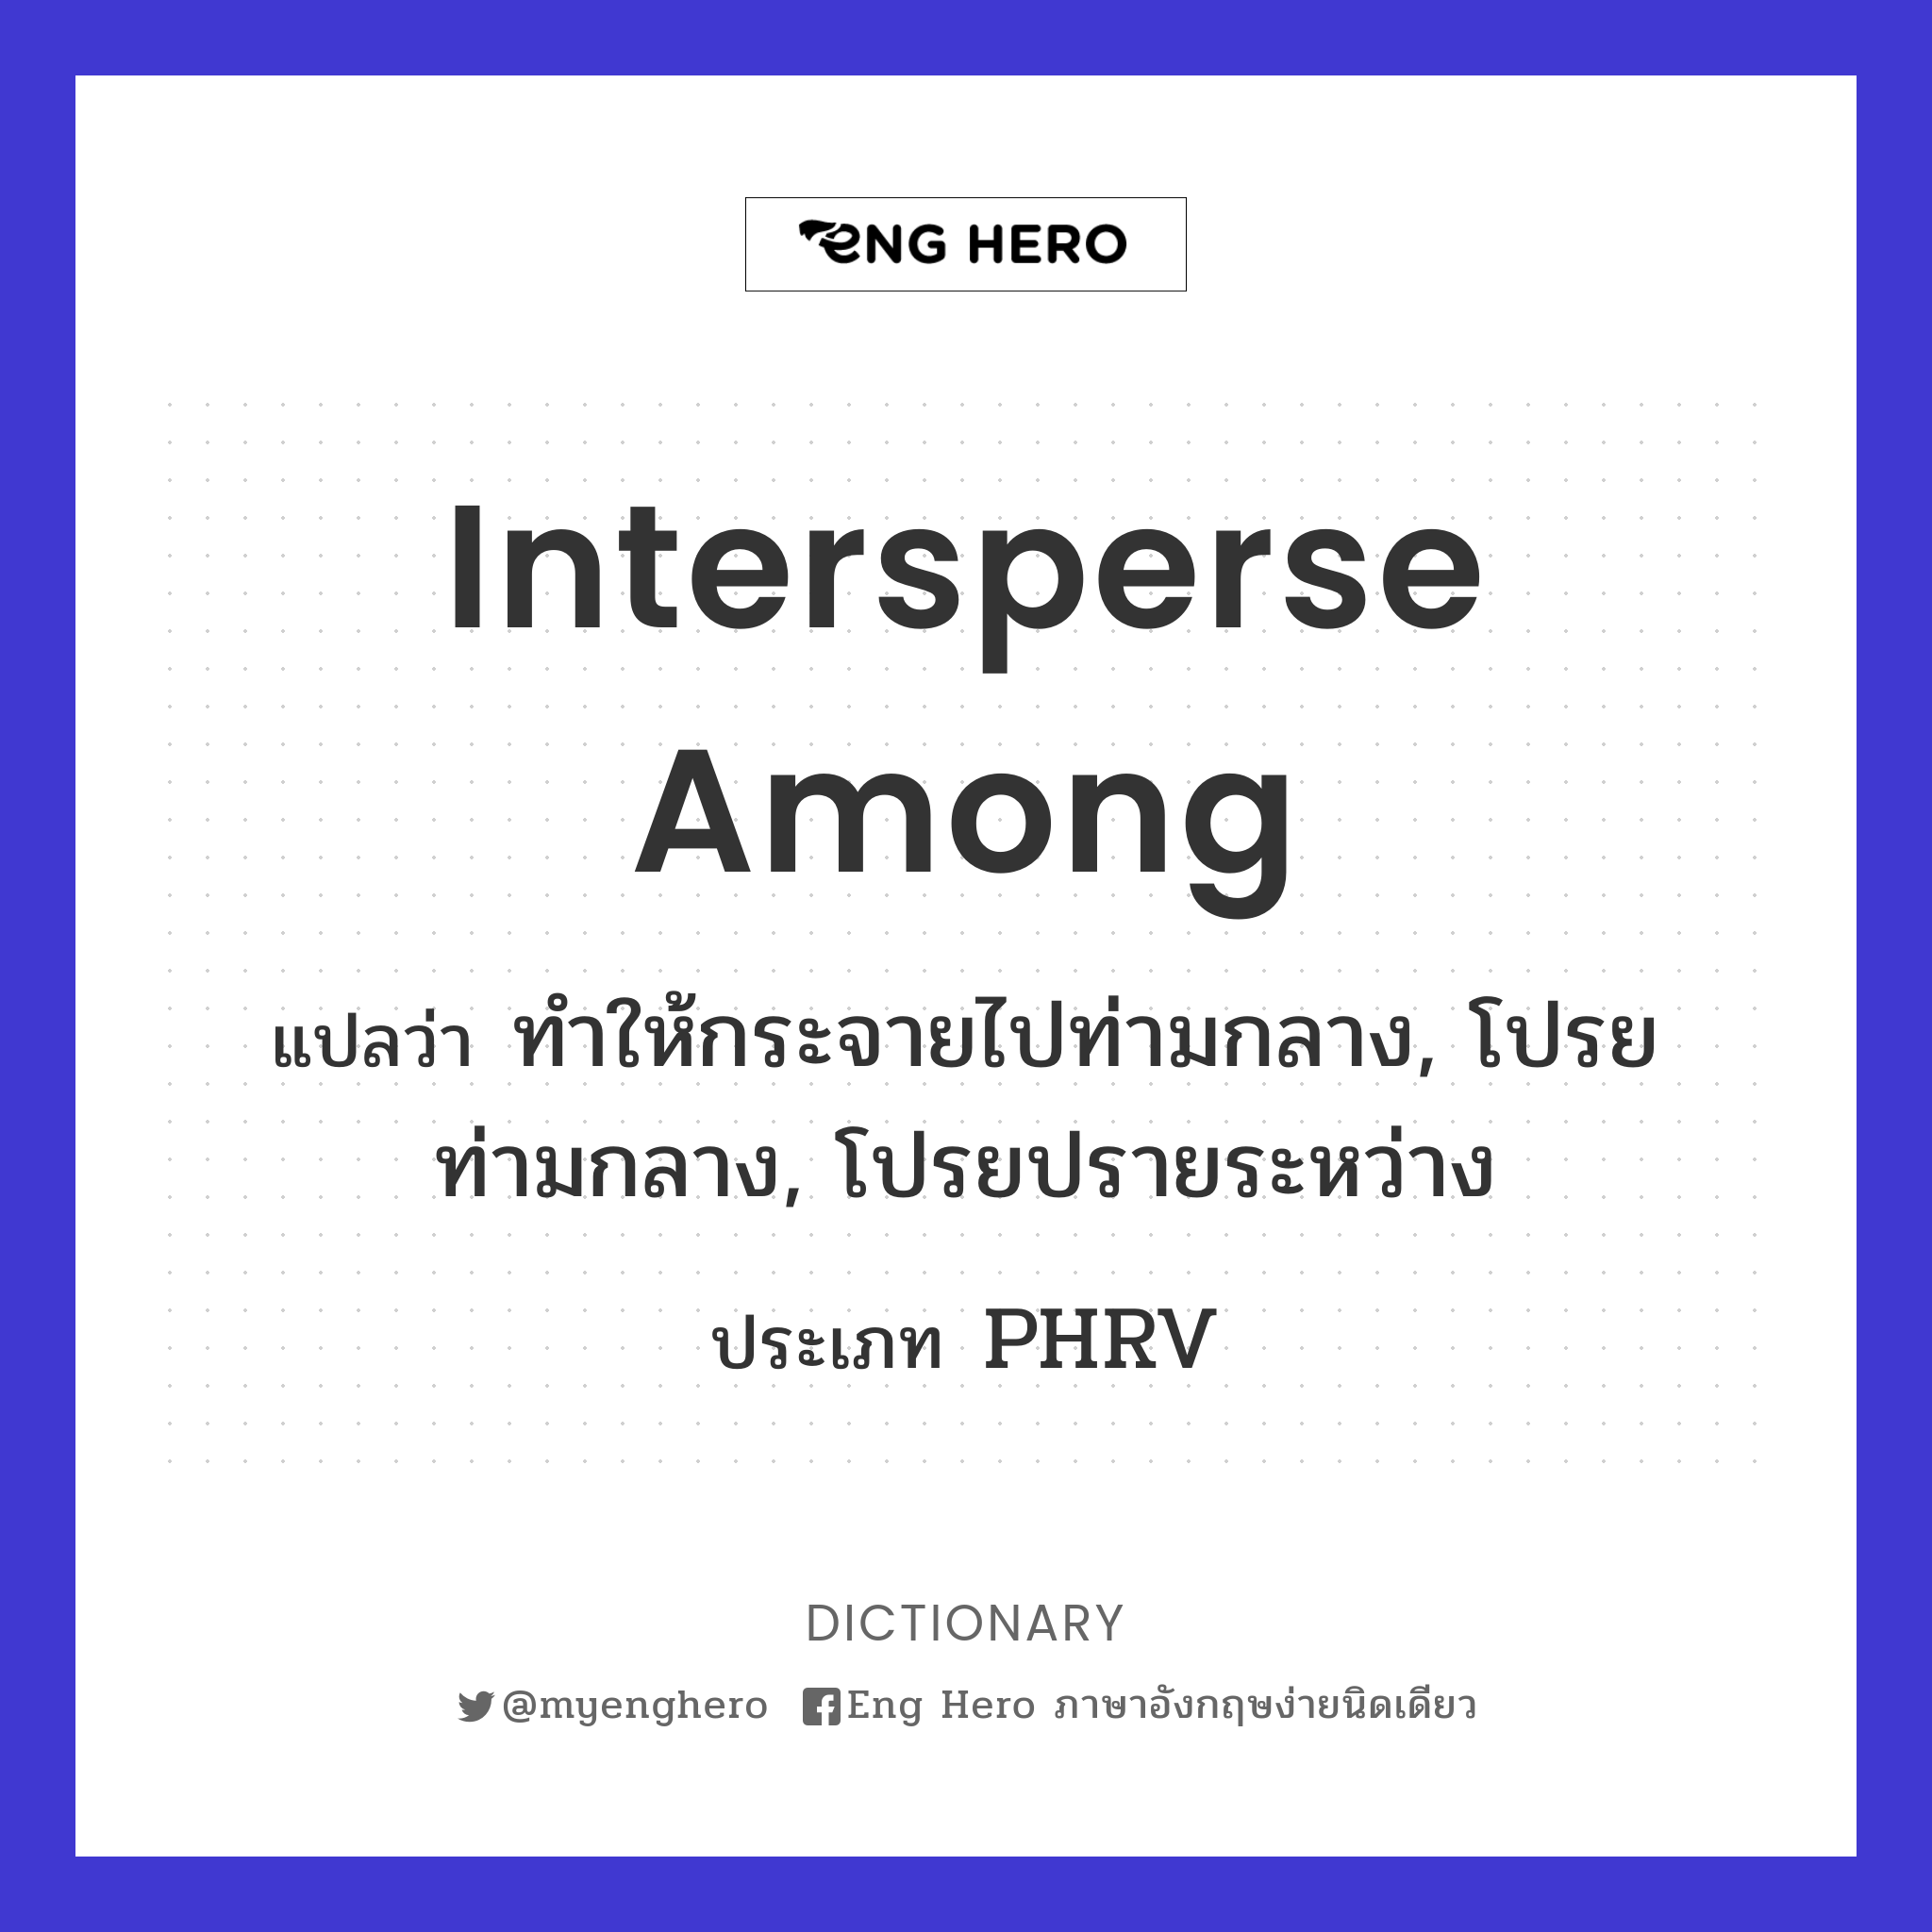 intersperse among